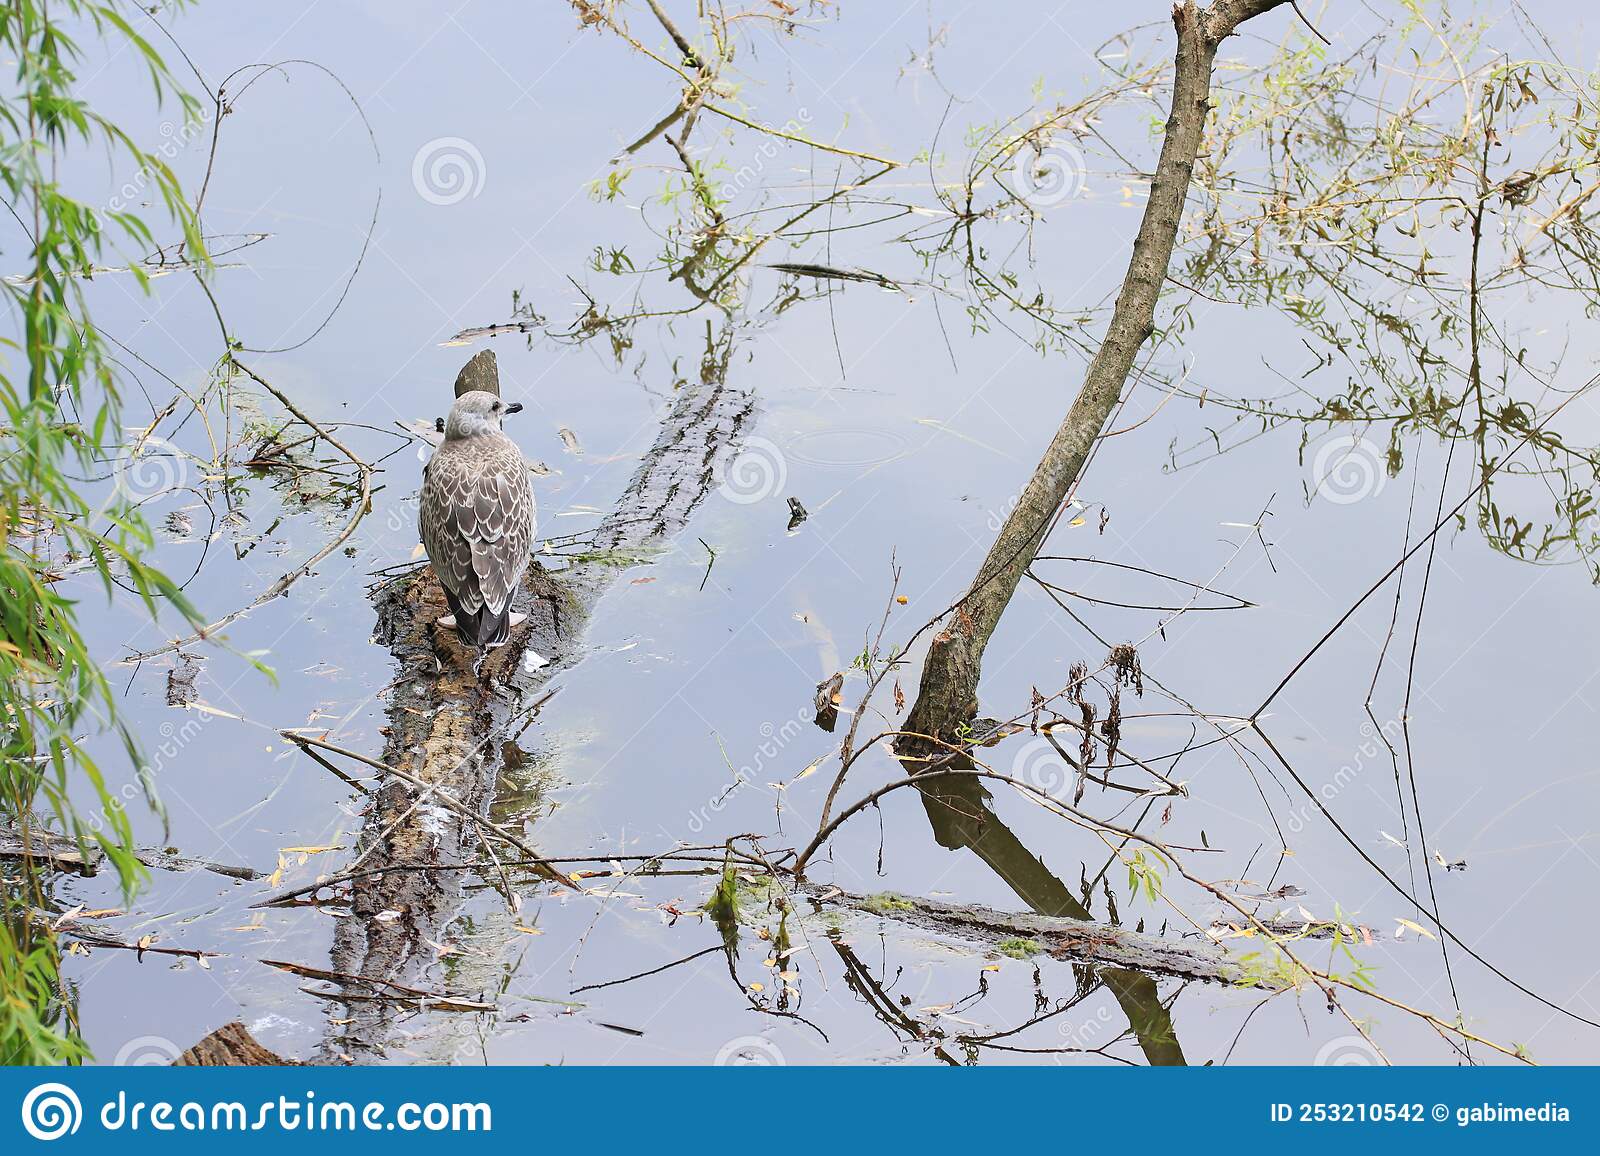  Gray kingfisher on a small log.